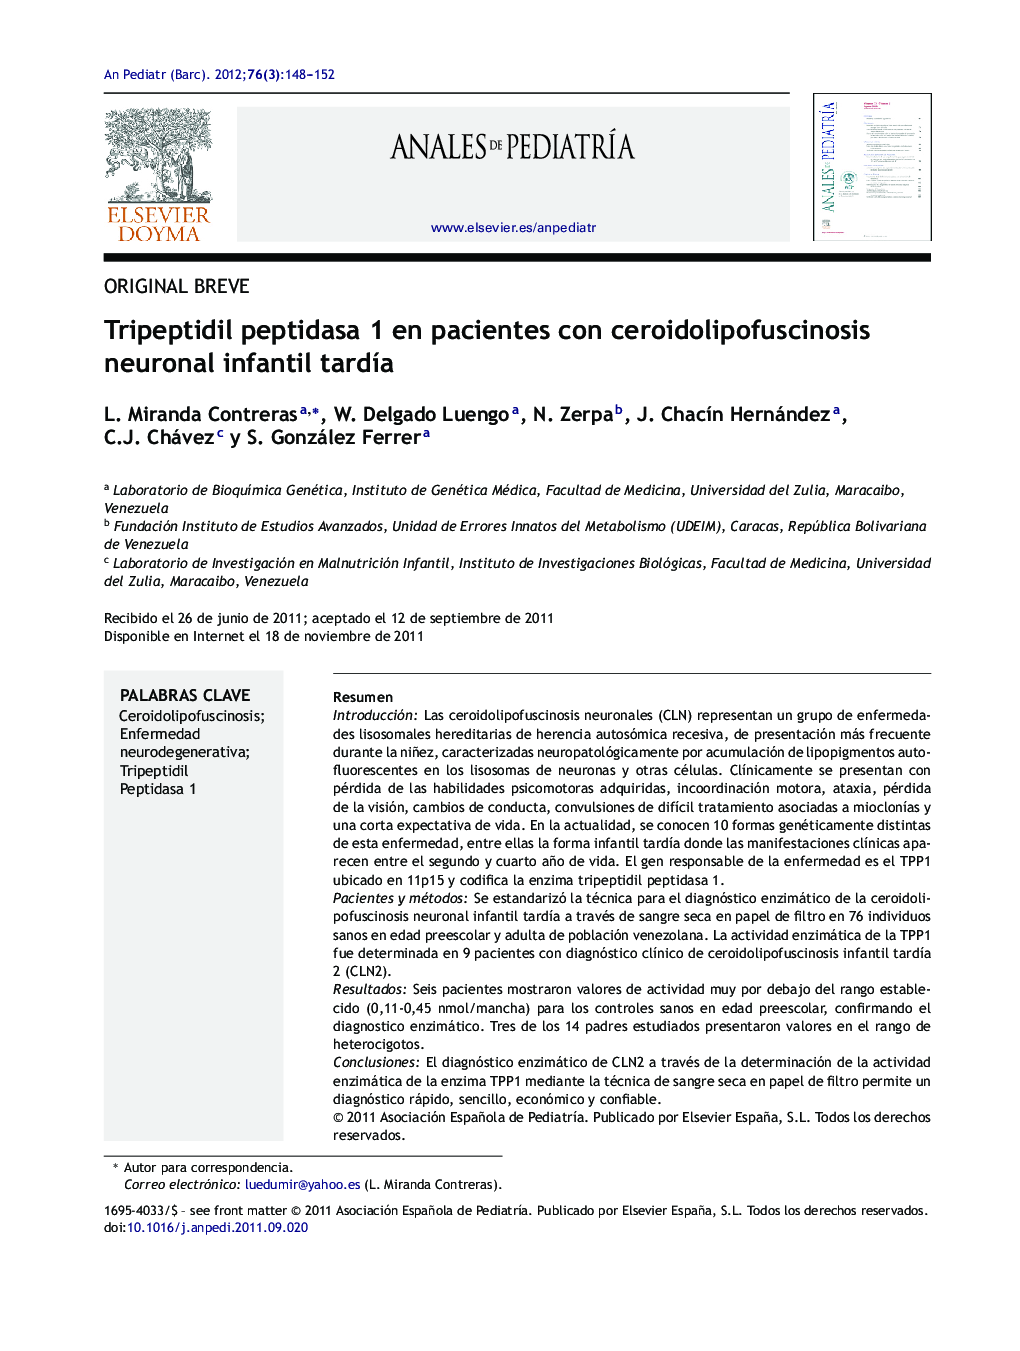 Tripeptidil peptidasa 1 en pacientes con ceroidolipofuscinosis neuronal infantil tardía